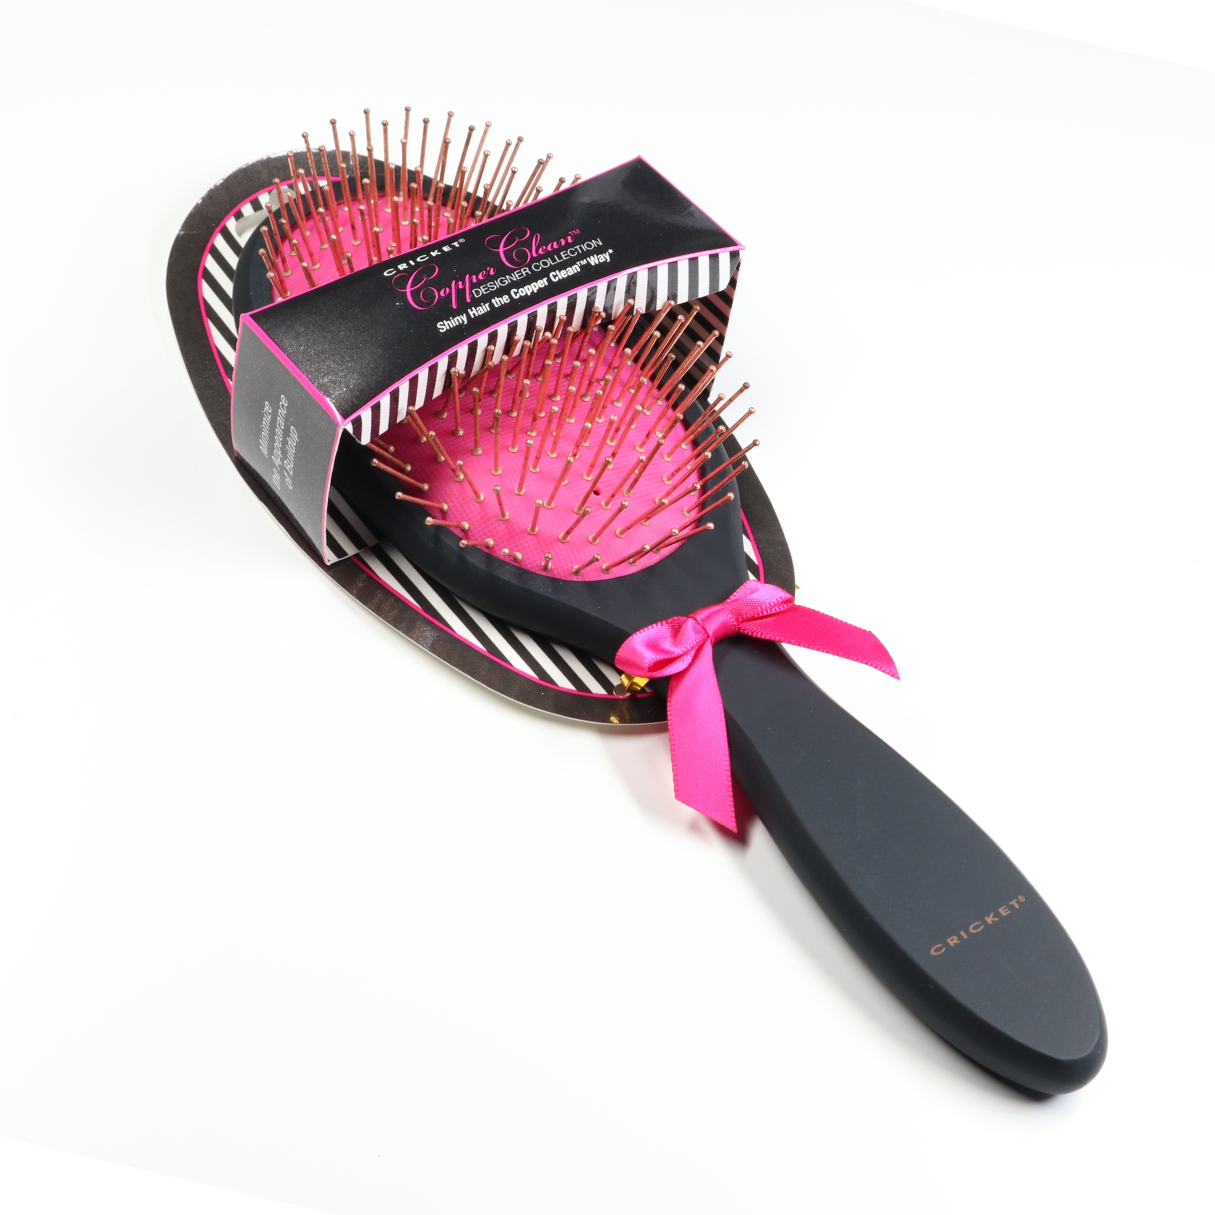 Cricket Copper Clean Designer Sculpt Paddle Hair Brush with Copper Bristles 1 Count